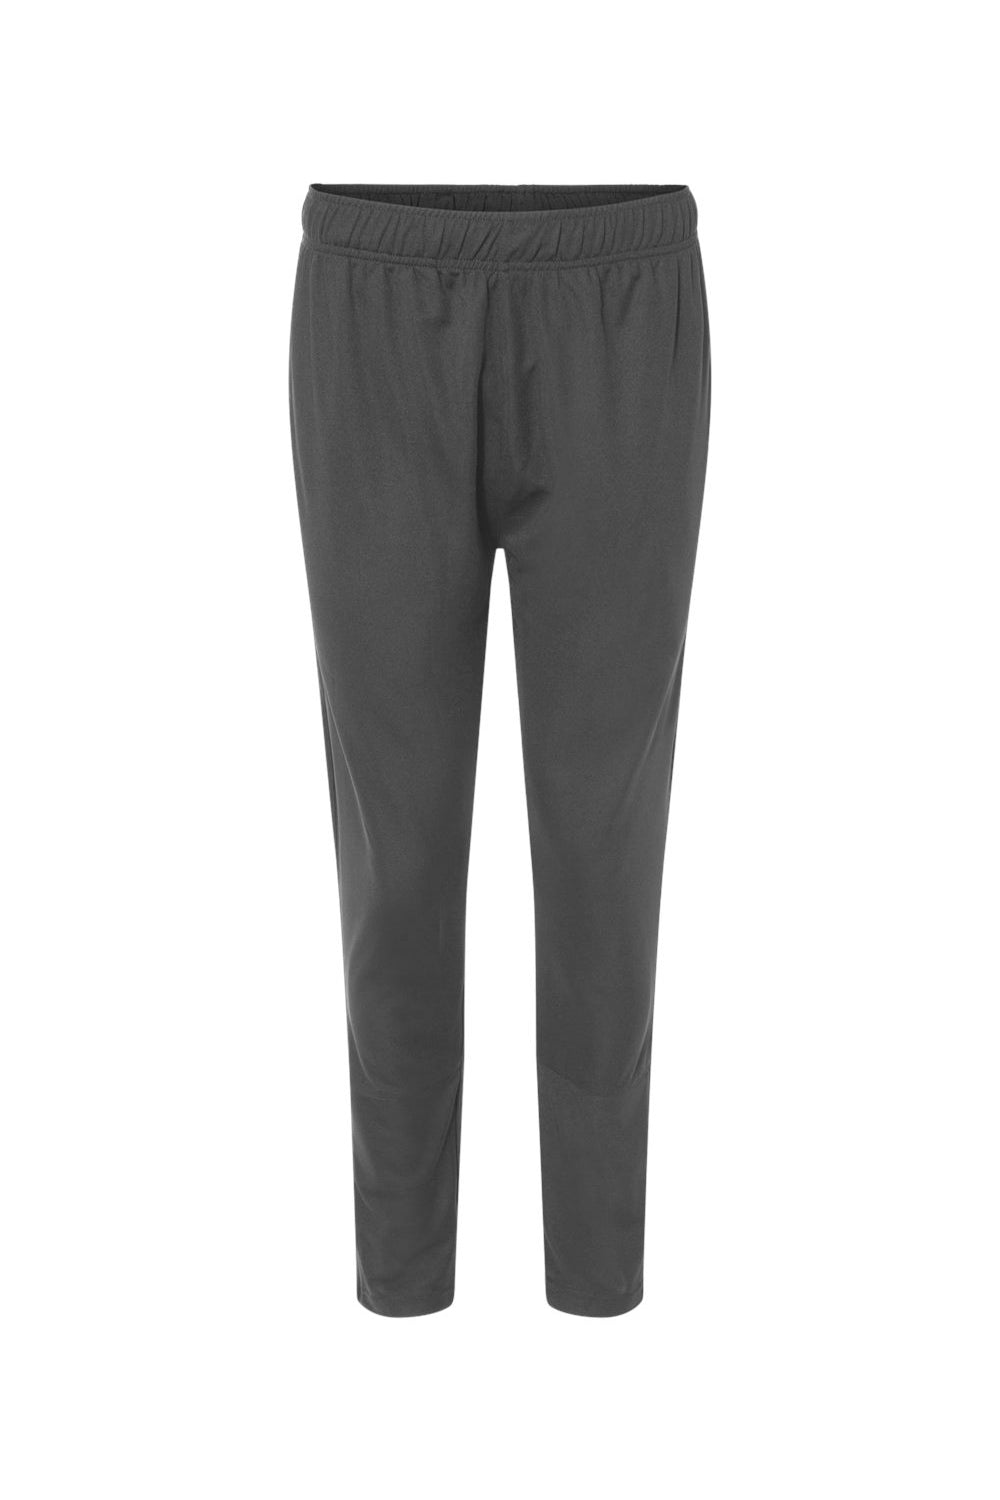 Badger 7724 Mens Athletic Pants w/ Pockets Graphite Grey Flat Front